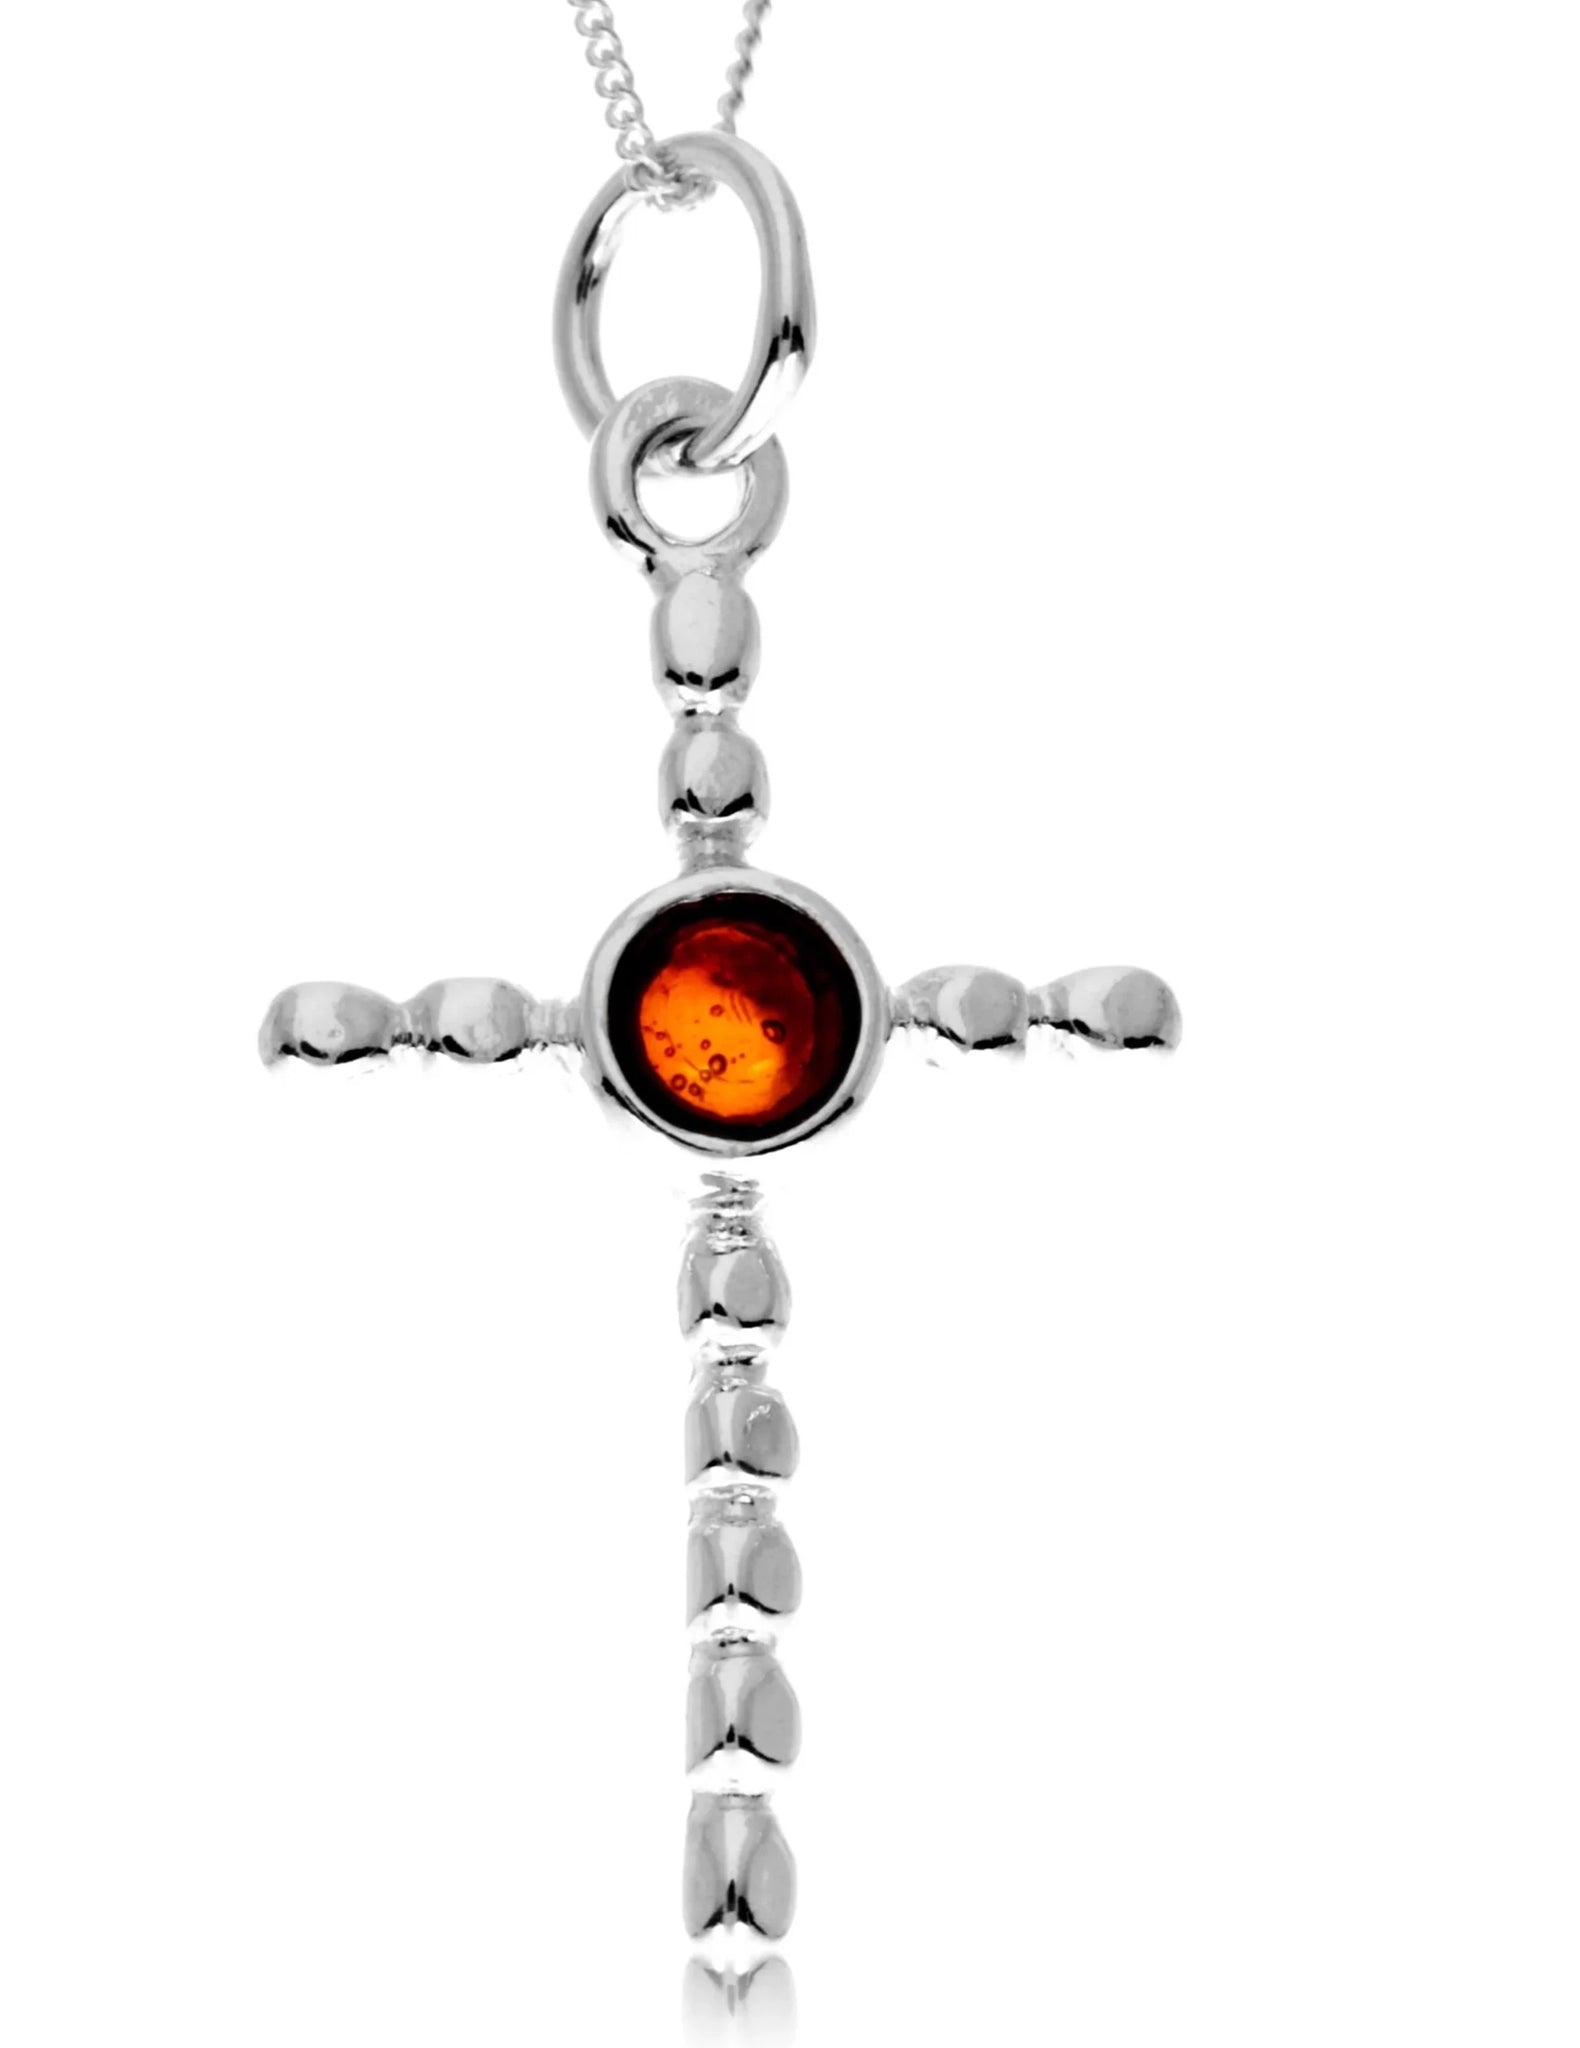 Amber 925 Silver Modern Cross Pendant